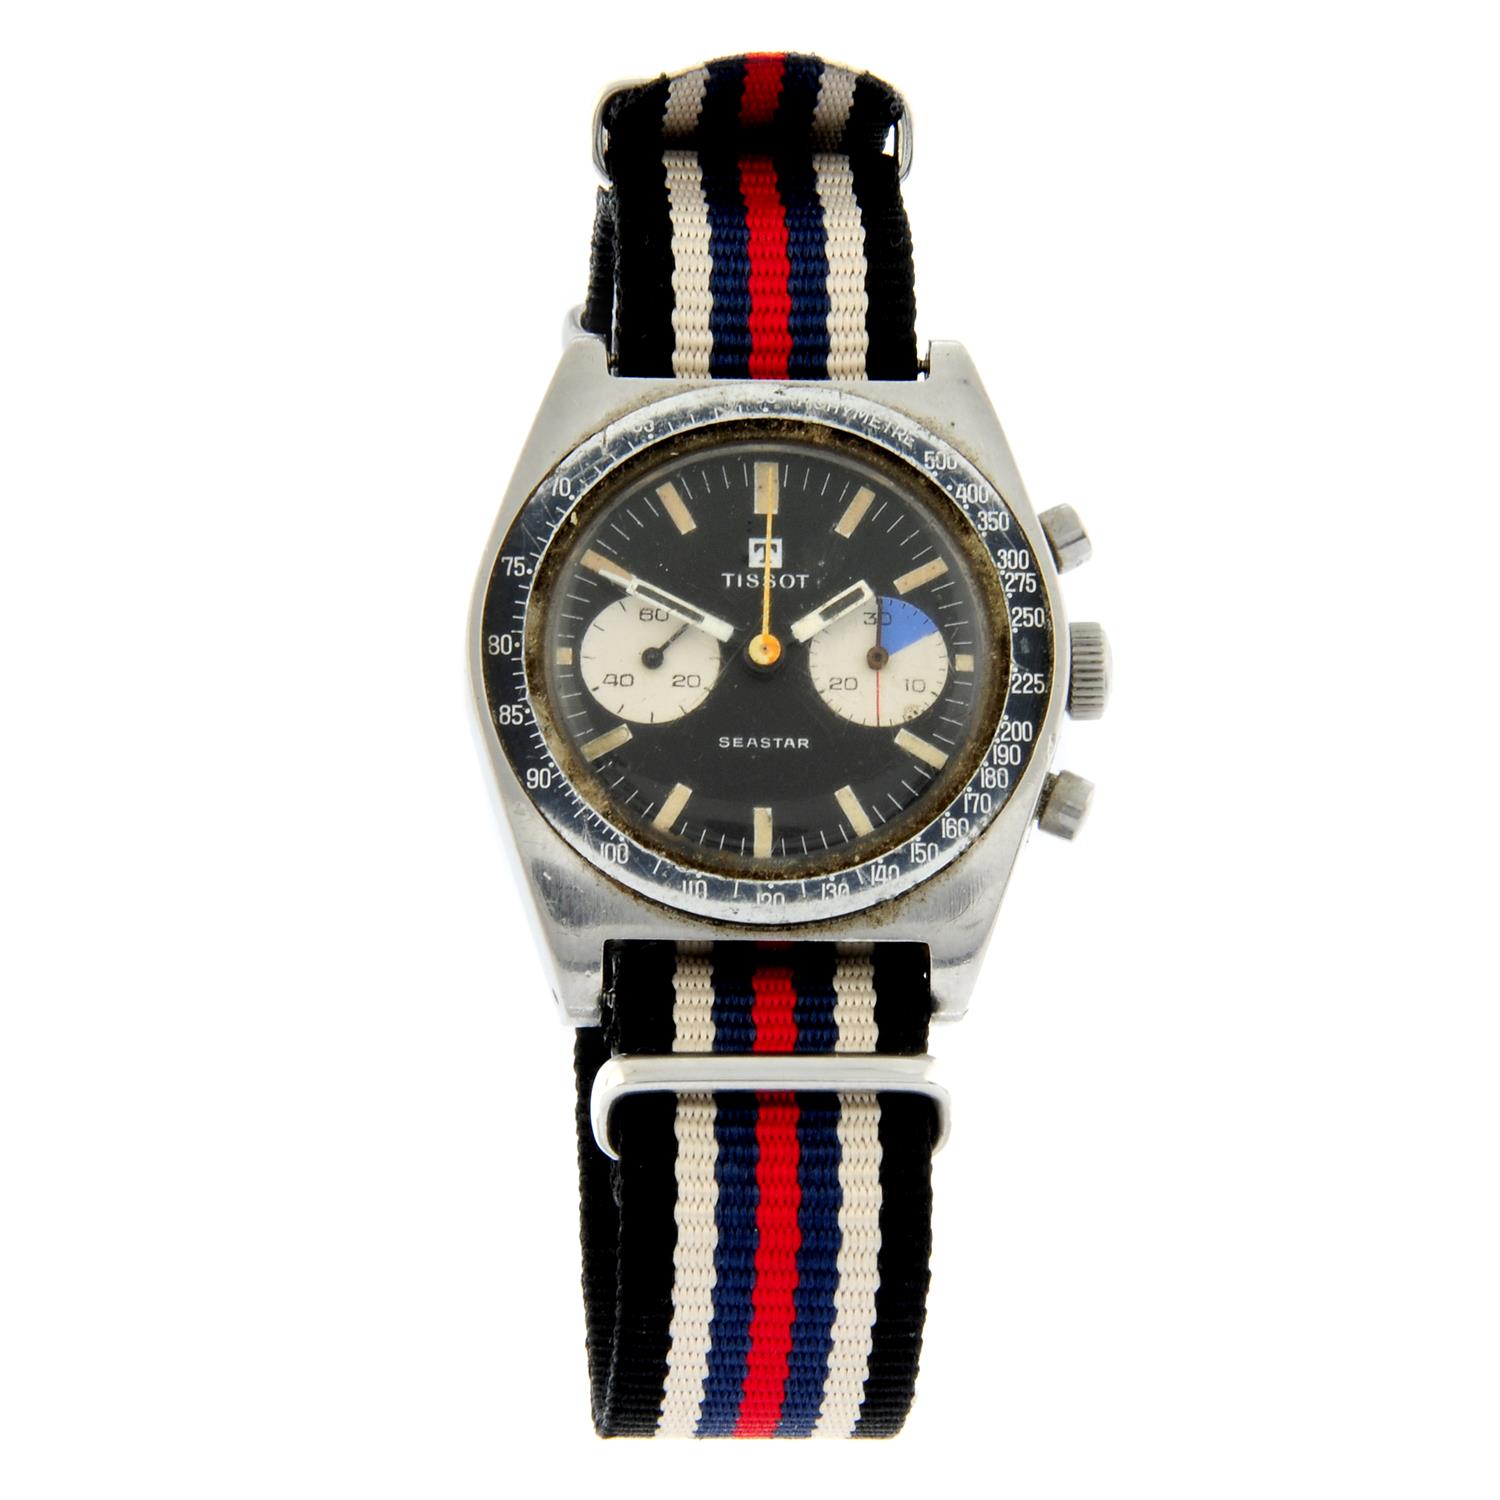 Tissot - a Seastar chronograph watch, 36mm.